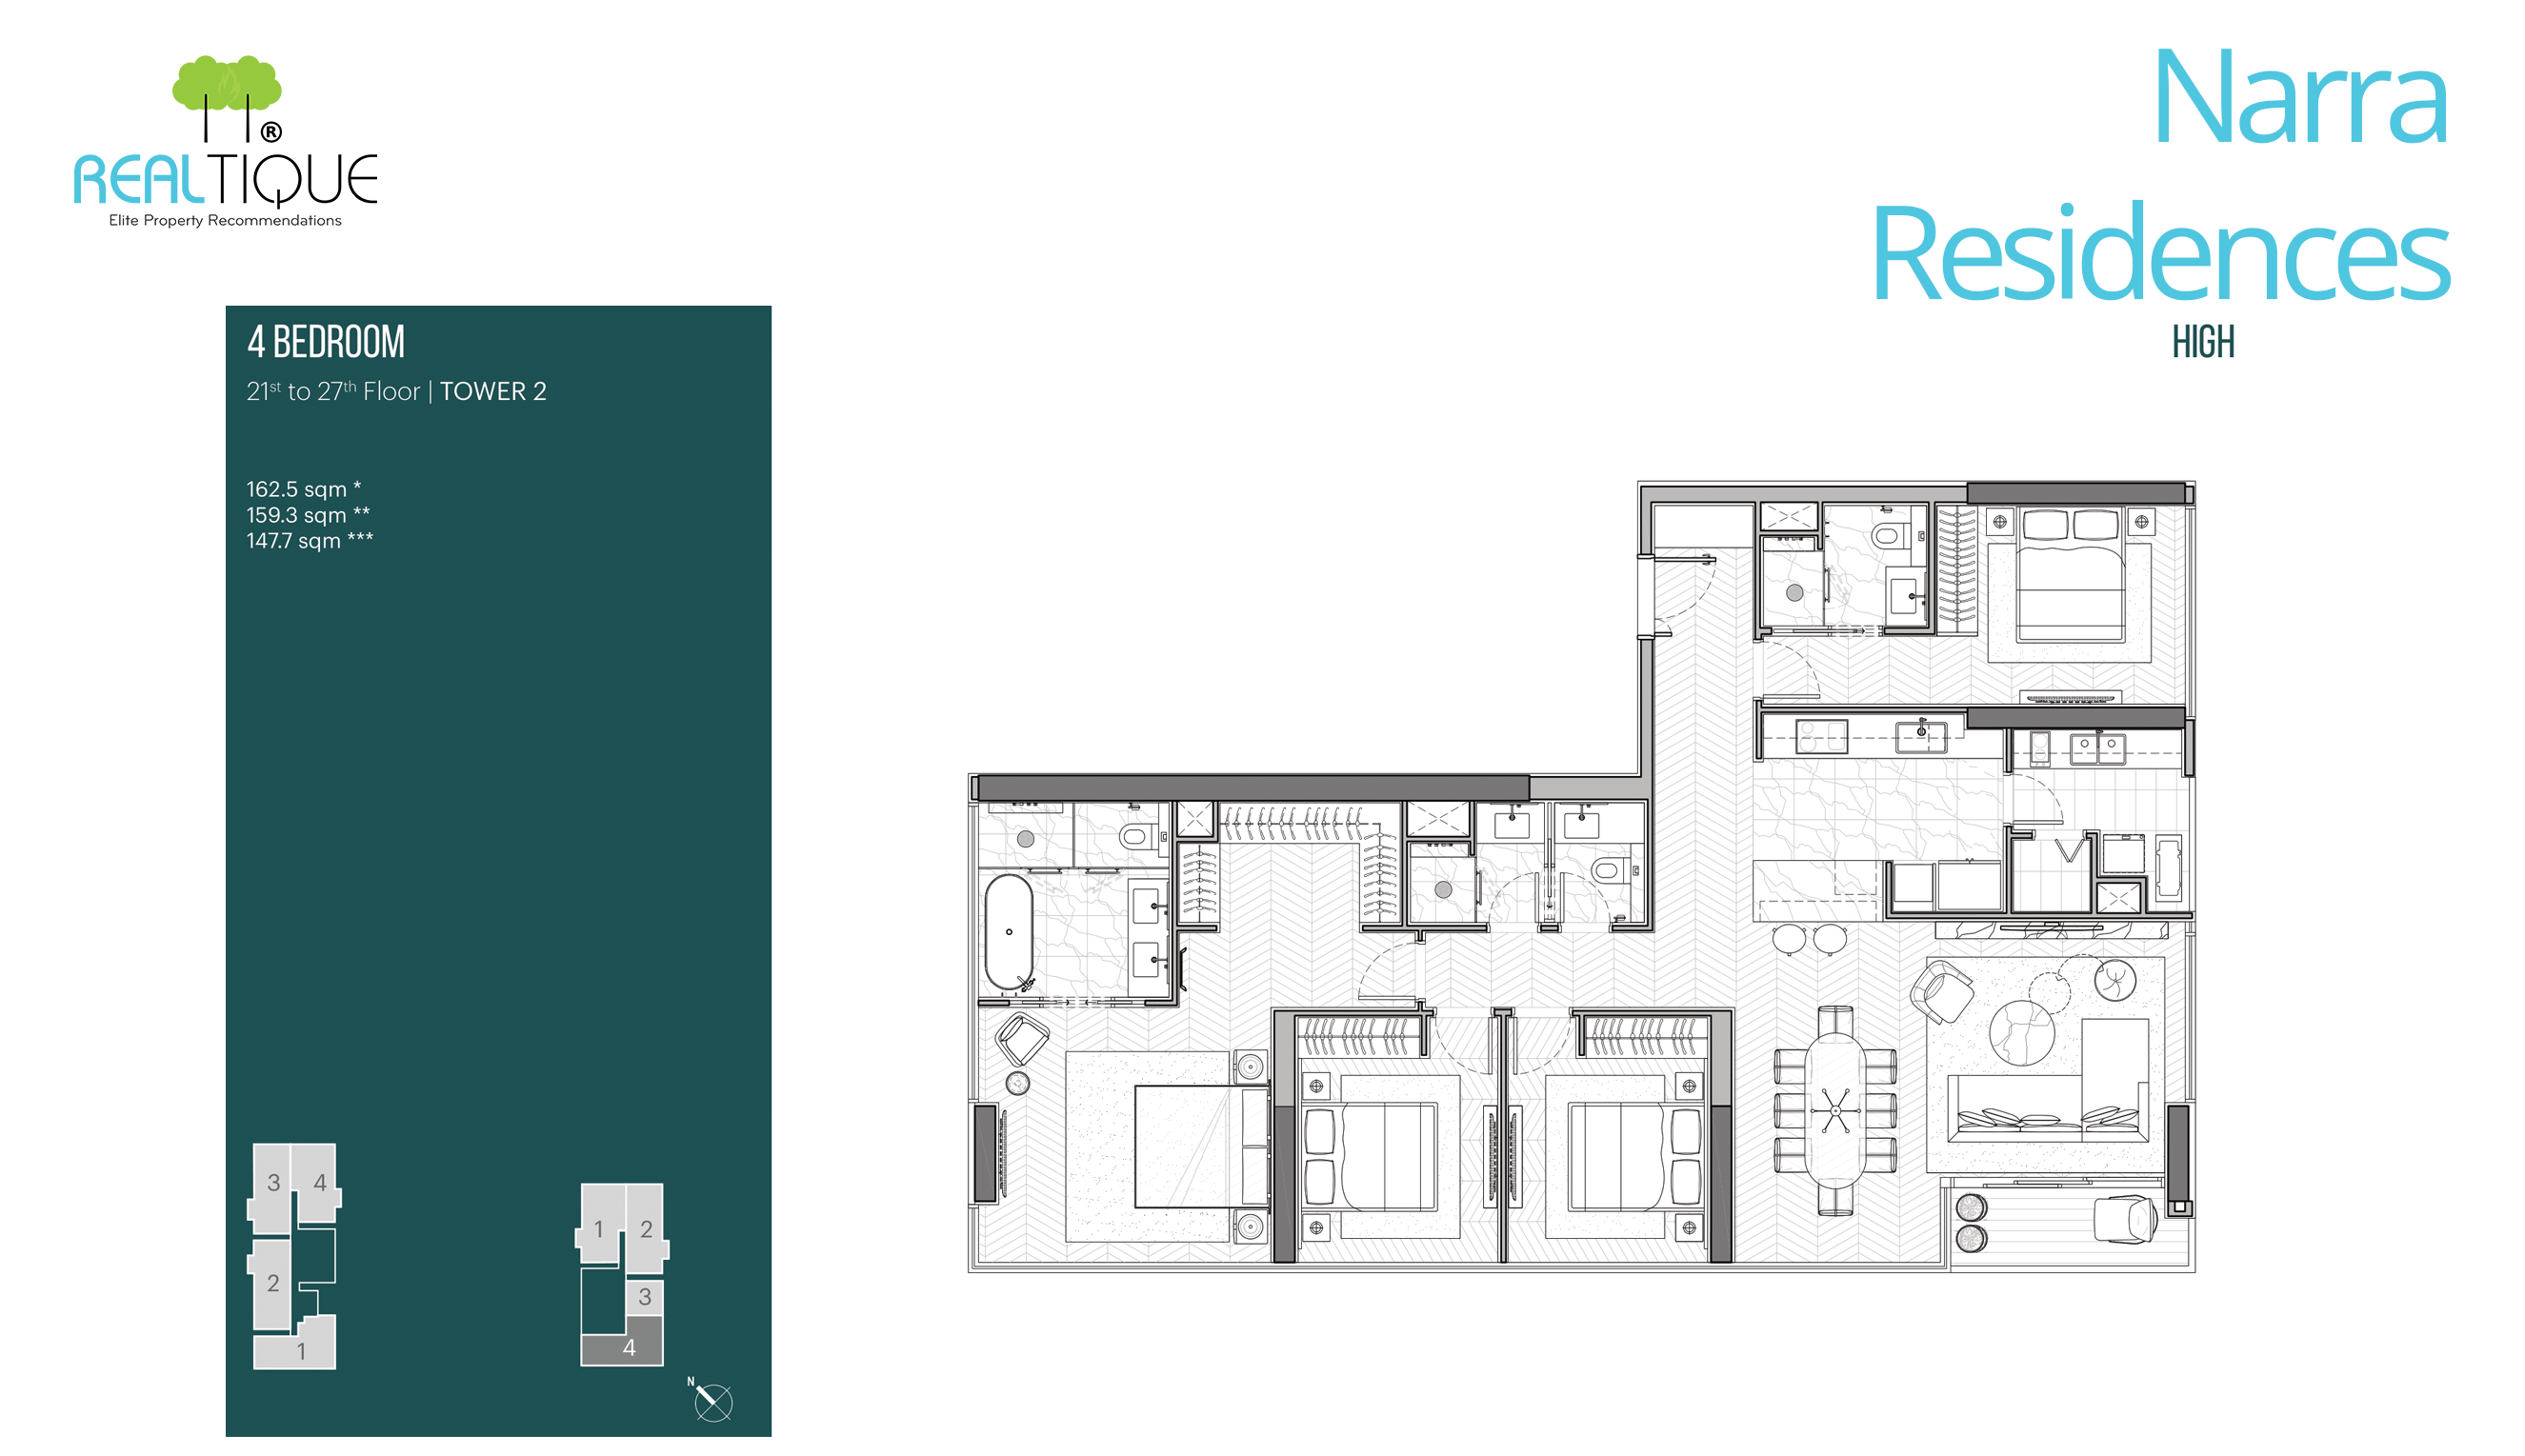 4 Bedroom Layout of Narra Residences (MU8)